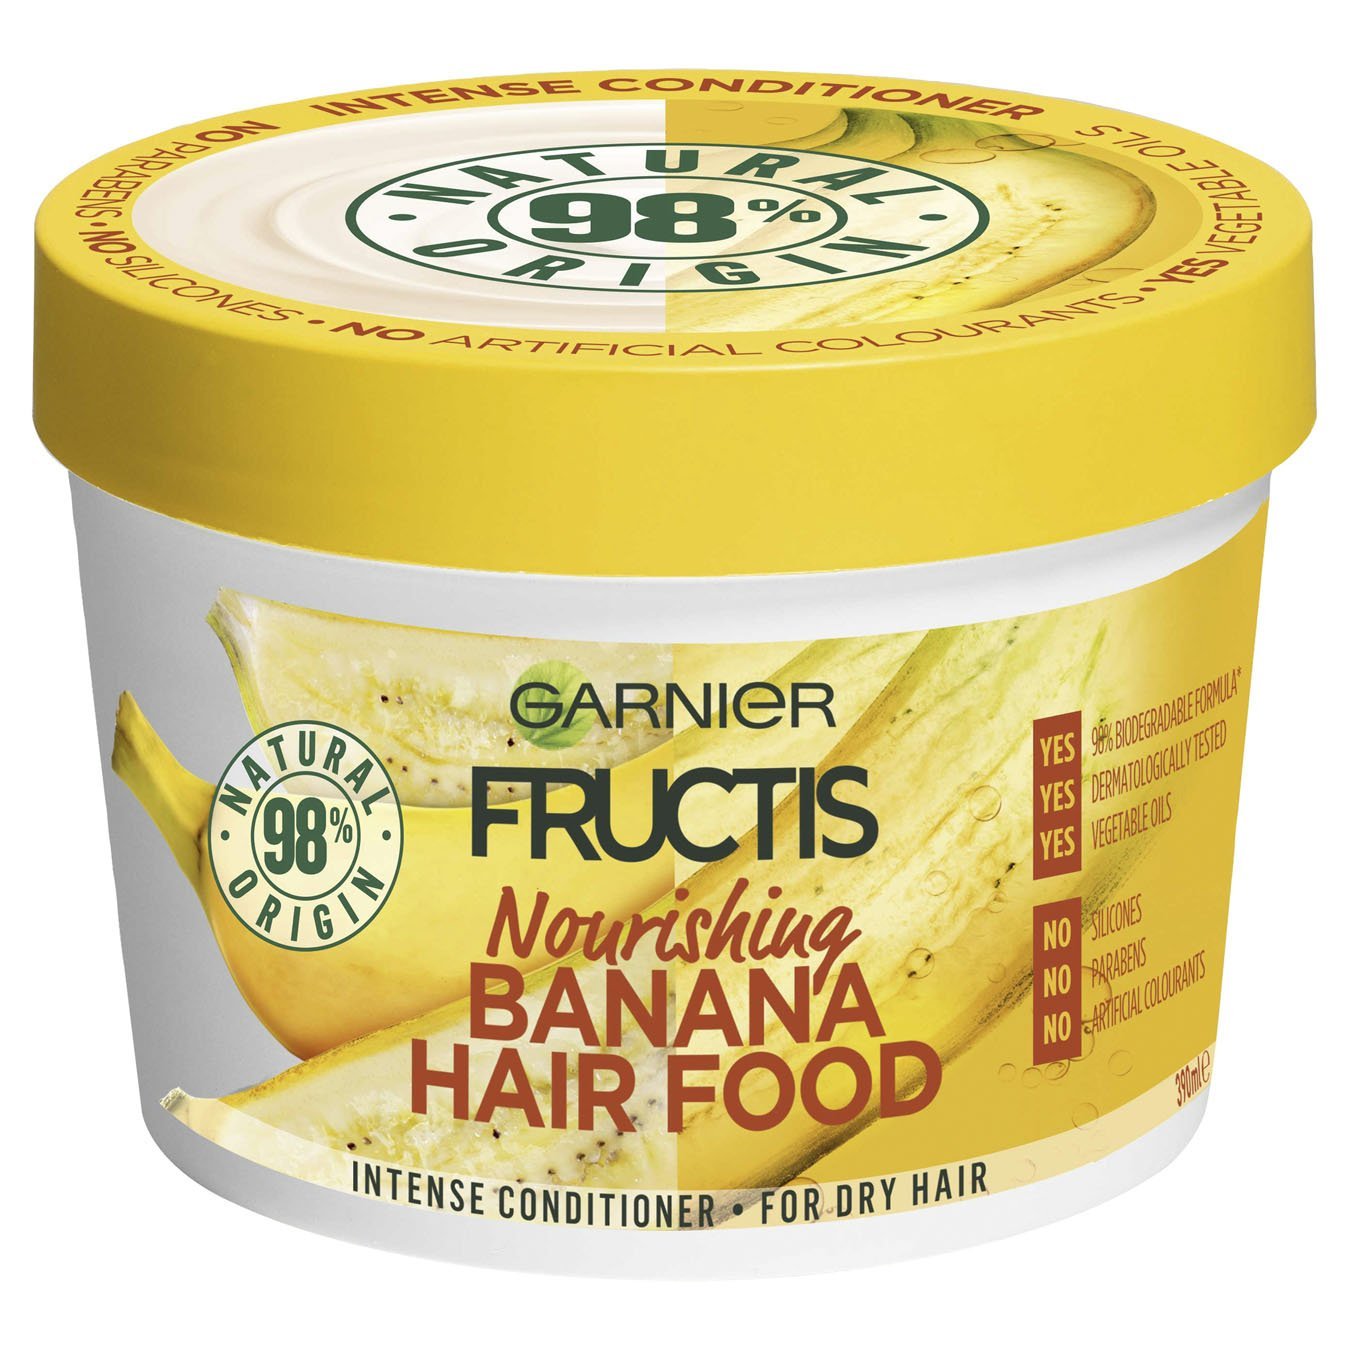 fructis hair food nourishing banana